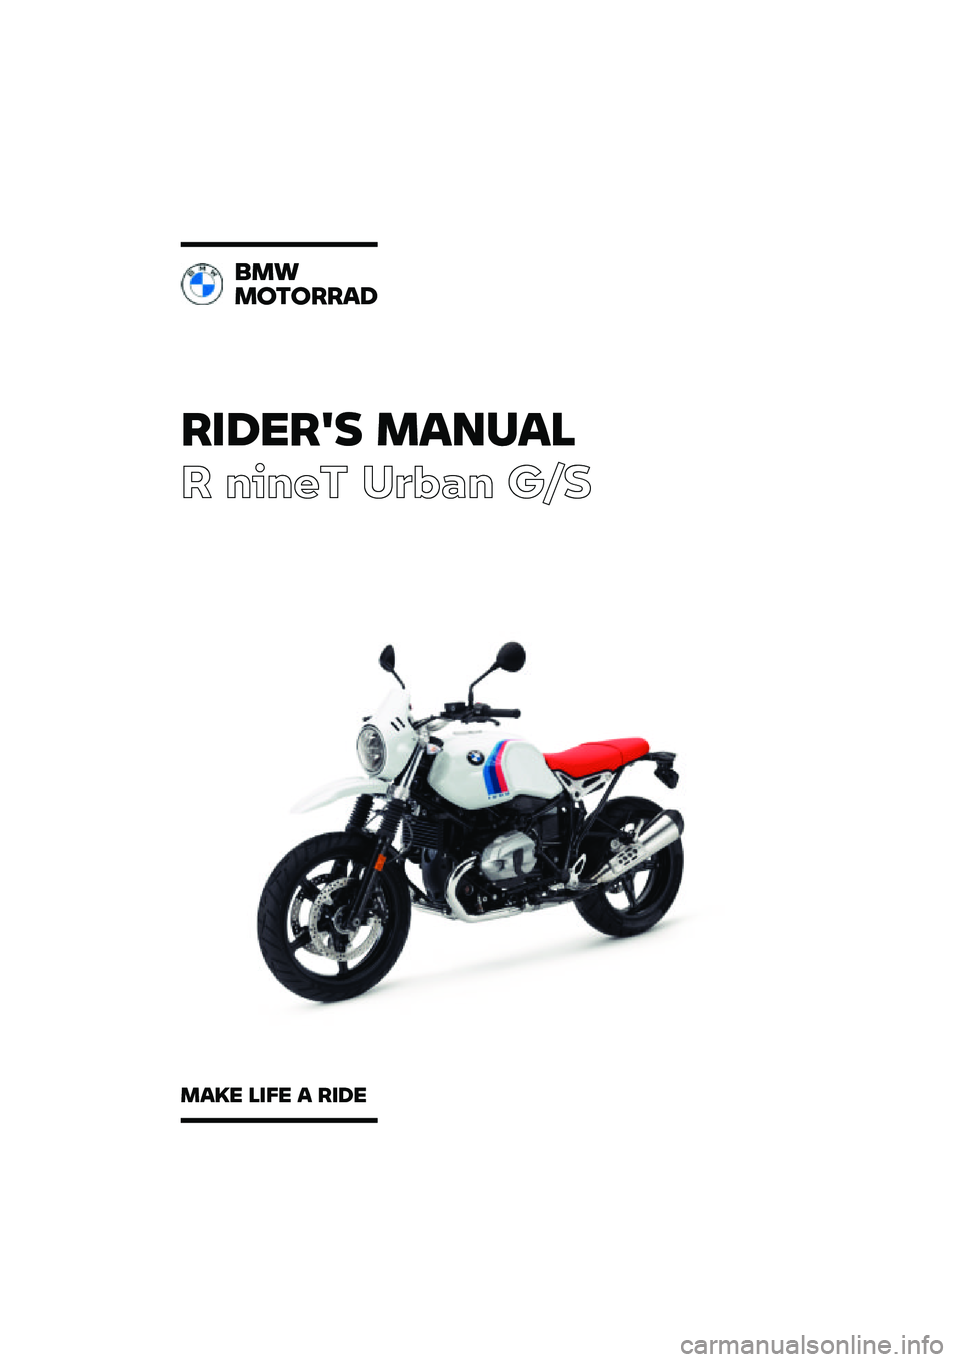 BMW MOTORRAD R NINE T URVAN G/S 2021  Riders Manual (in English) ������� �\b�	�
��	�\f
� ����� ��\b�	�
� ��\f�
�
�\b�
�\b������	�
�\b�	�� �\f��� �	 ���� 